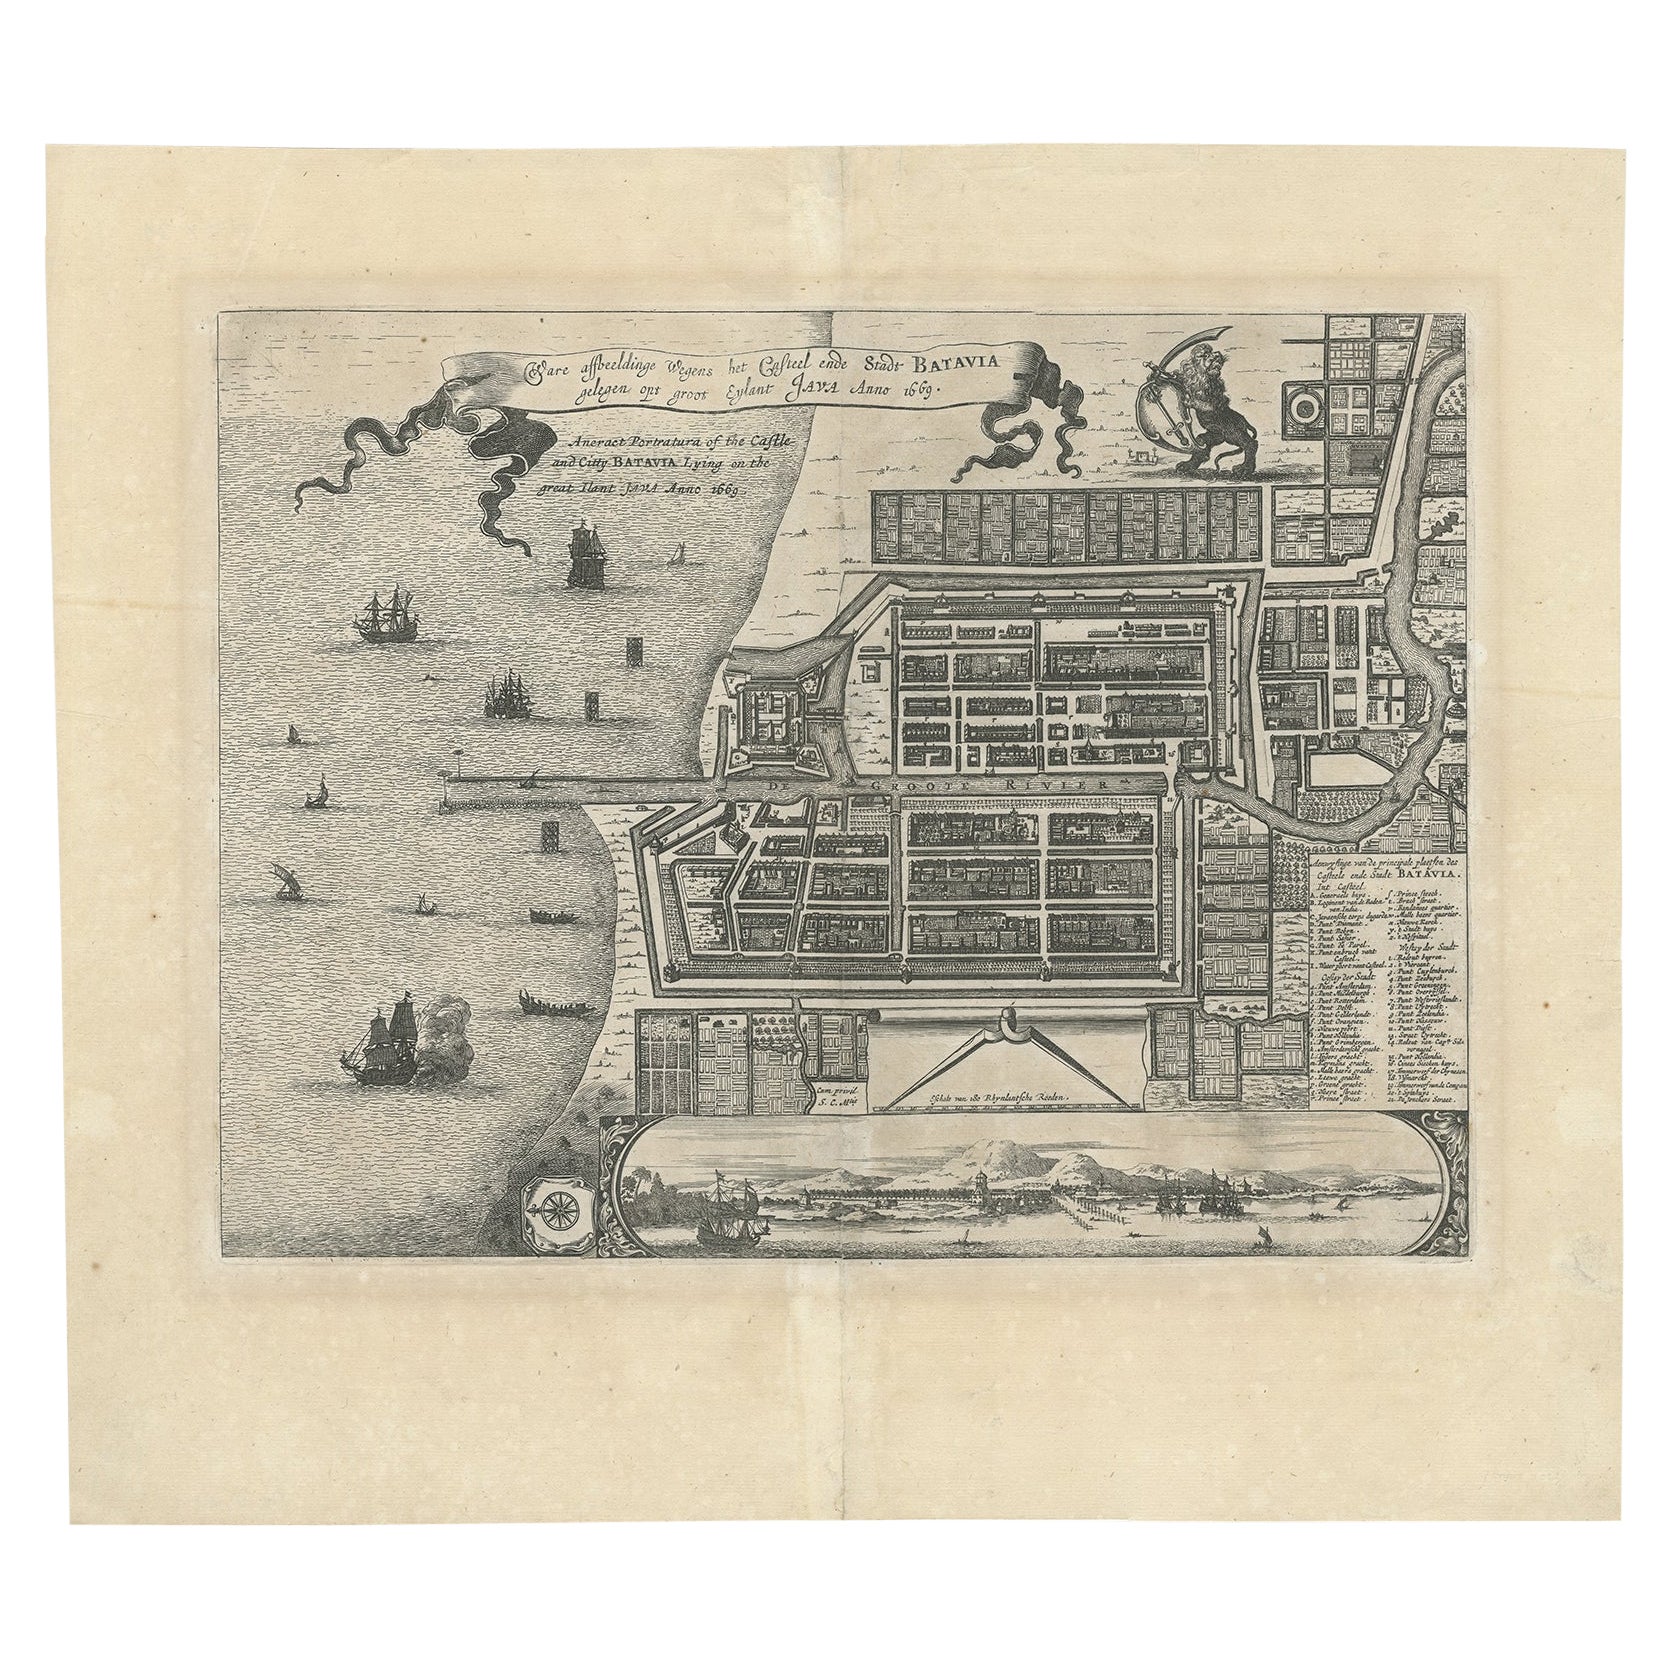 Carte ancienne de Batavia (Jakarta), Indonésie, par Montanus, vers 1669